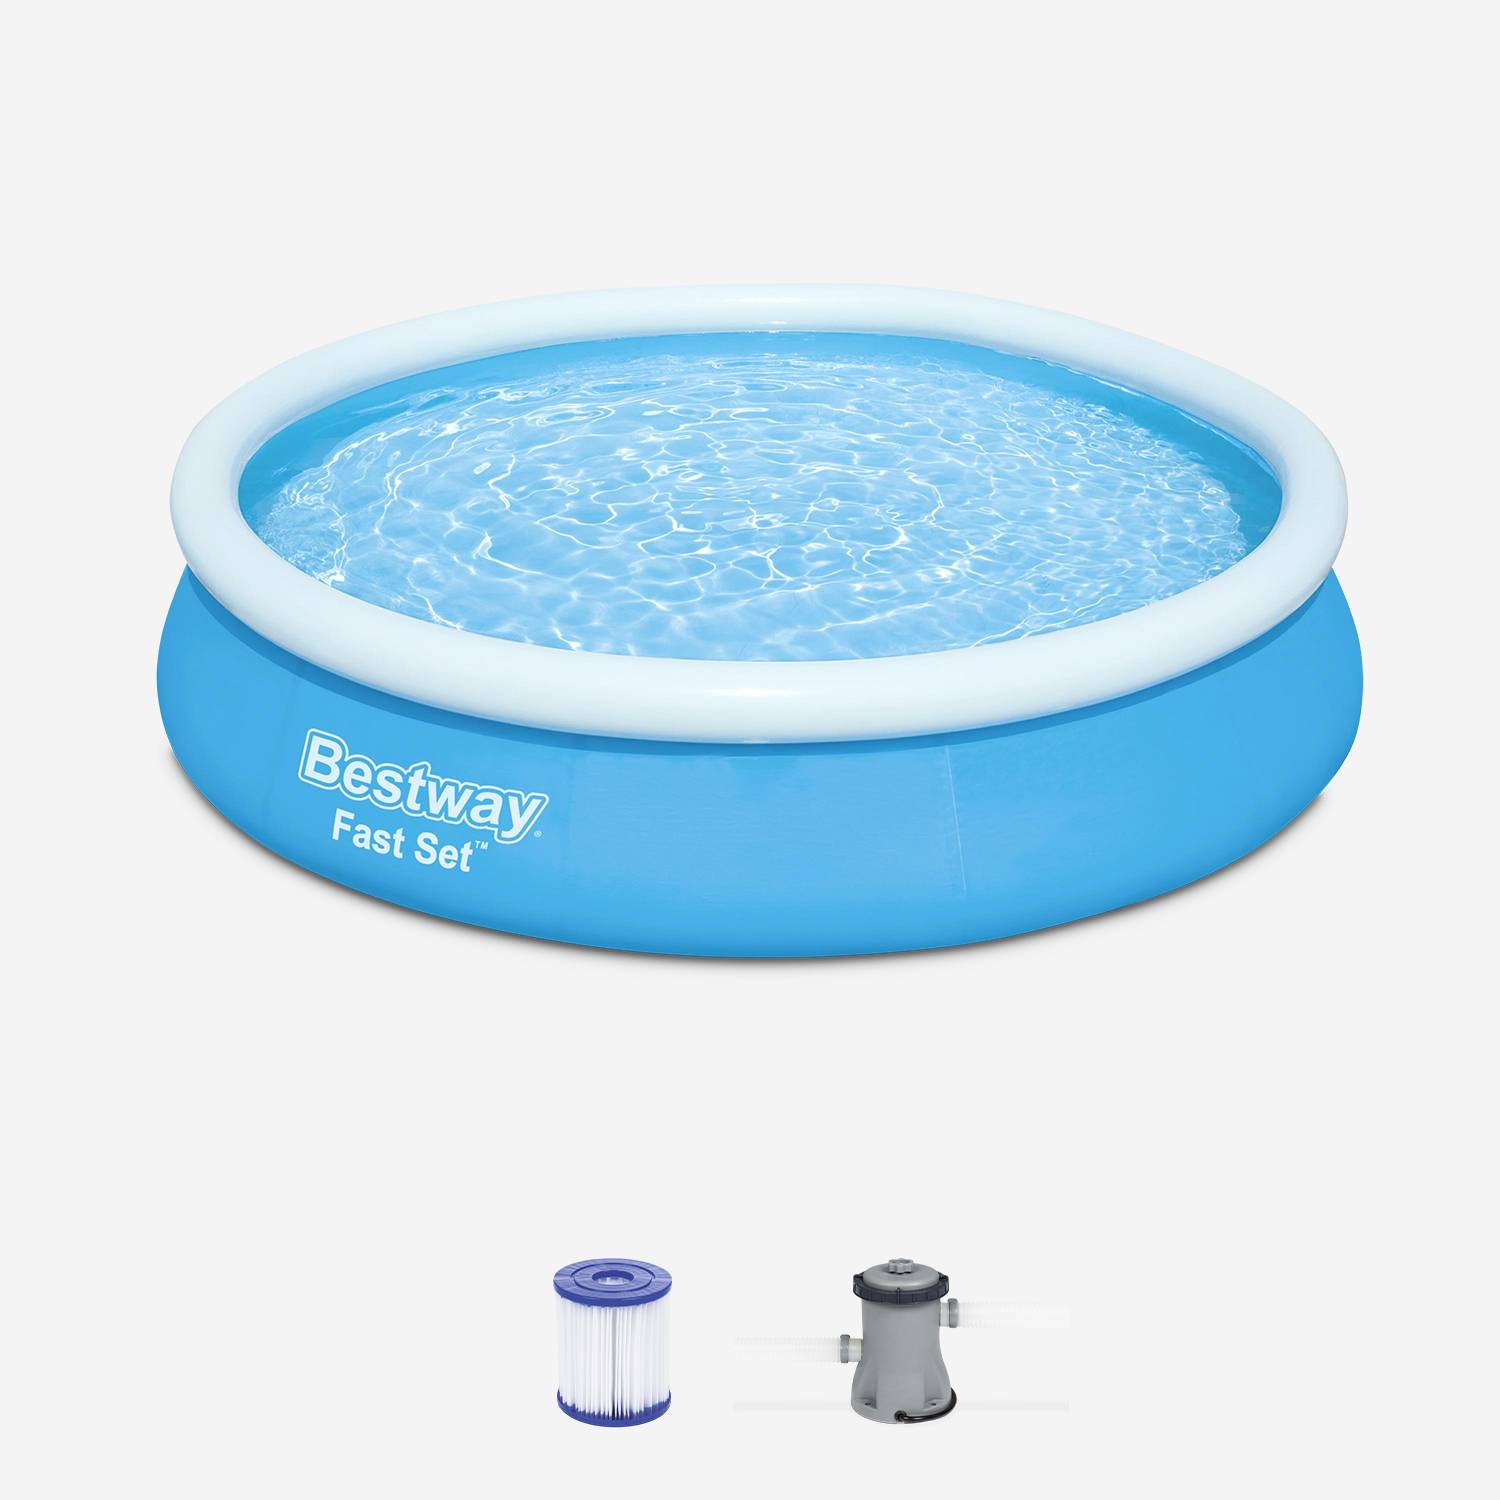 BESTWAY piscina gonfiabile autoportante blu - Jade ⌀ 360 x 76 cm - piscina fuori terra rotonda autoportante con filtro a cartuccia  + 1 cartuccia inclusa,sweeek,Photo1